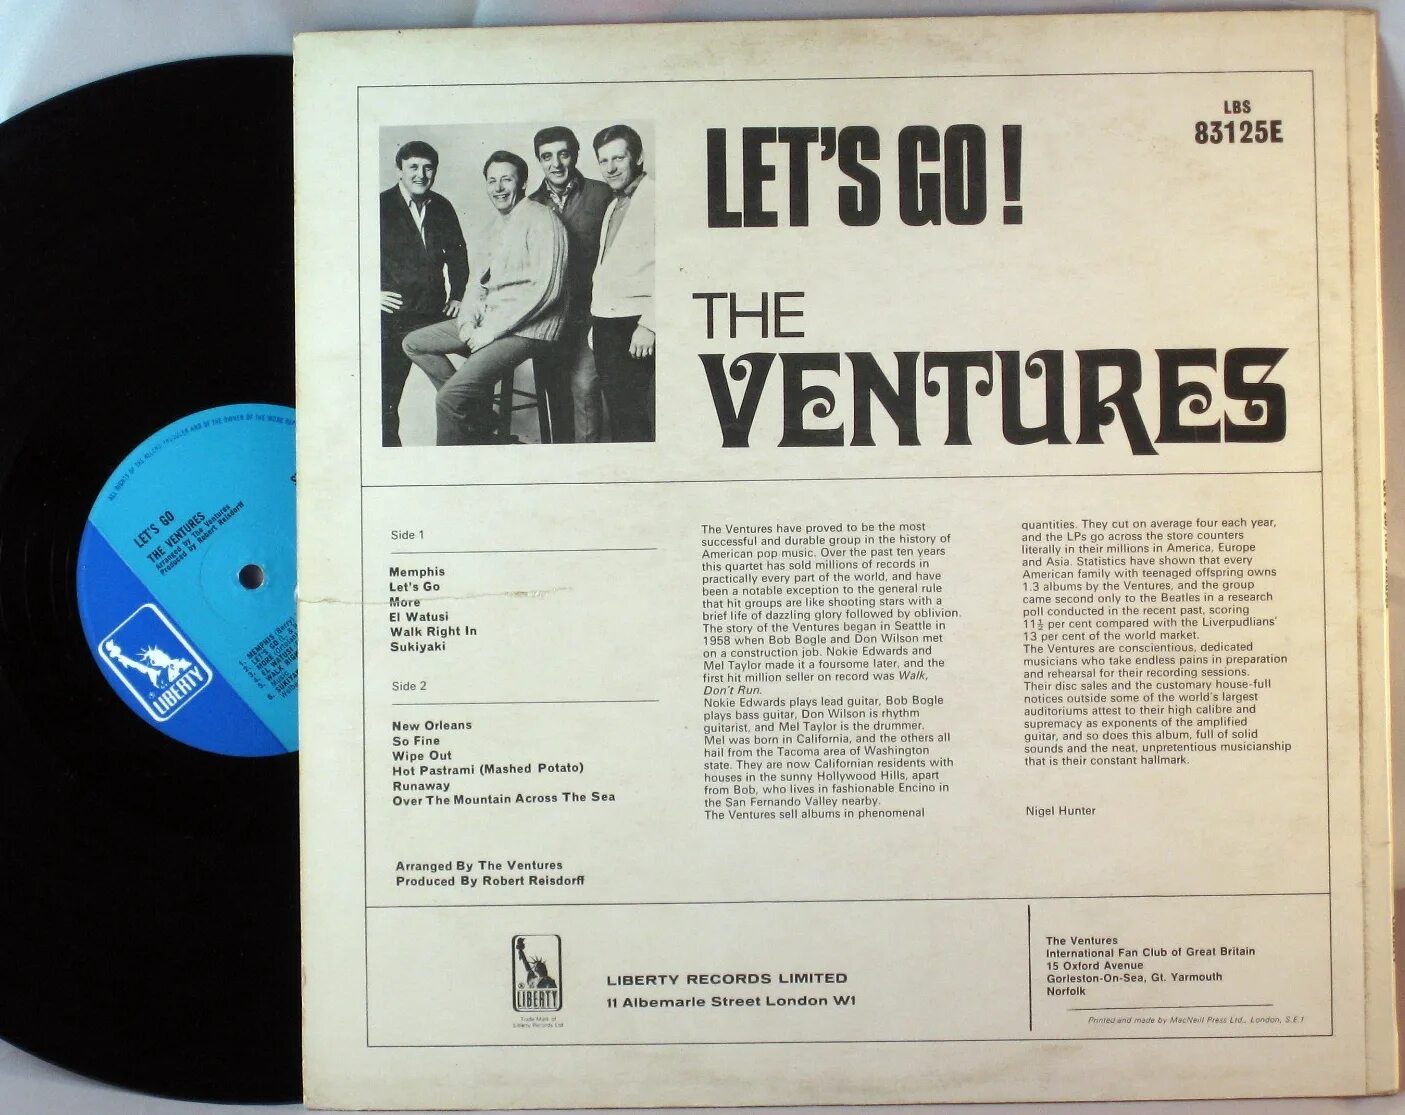 Let s отзывы. The Ventures 1963 - Let's go!. Обложки дисков the Ventures. Группа the Ventures альбомы. The Ventures - Club.